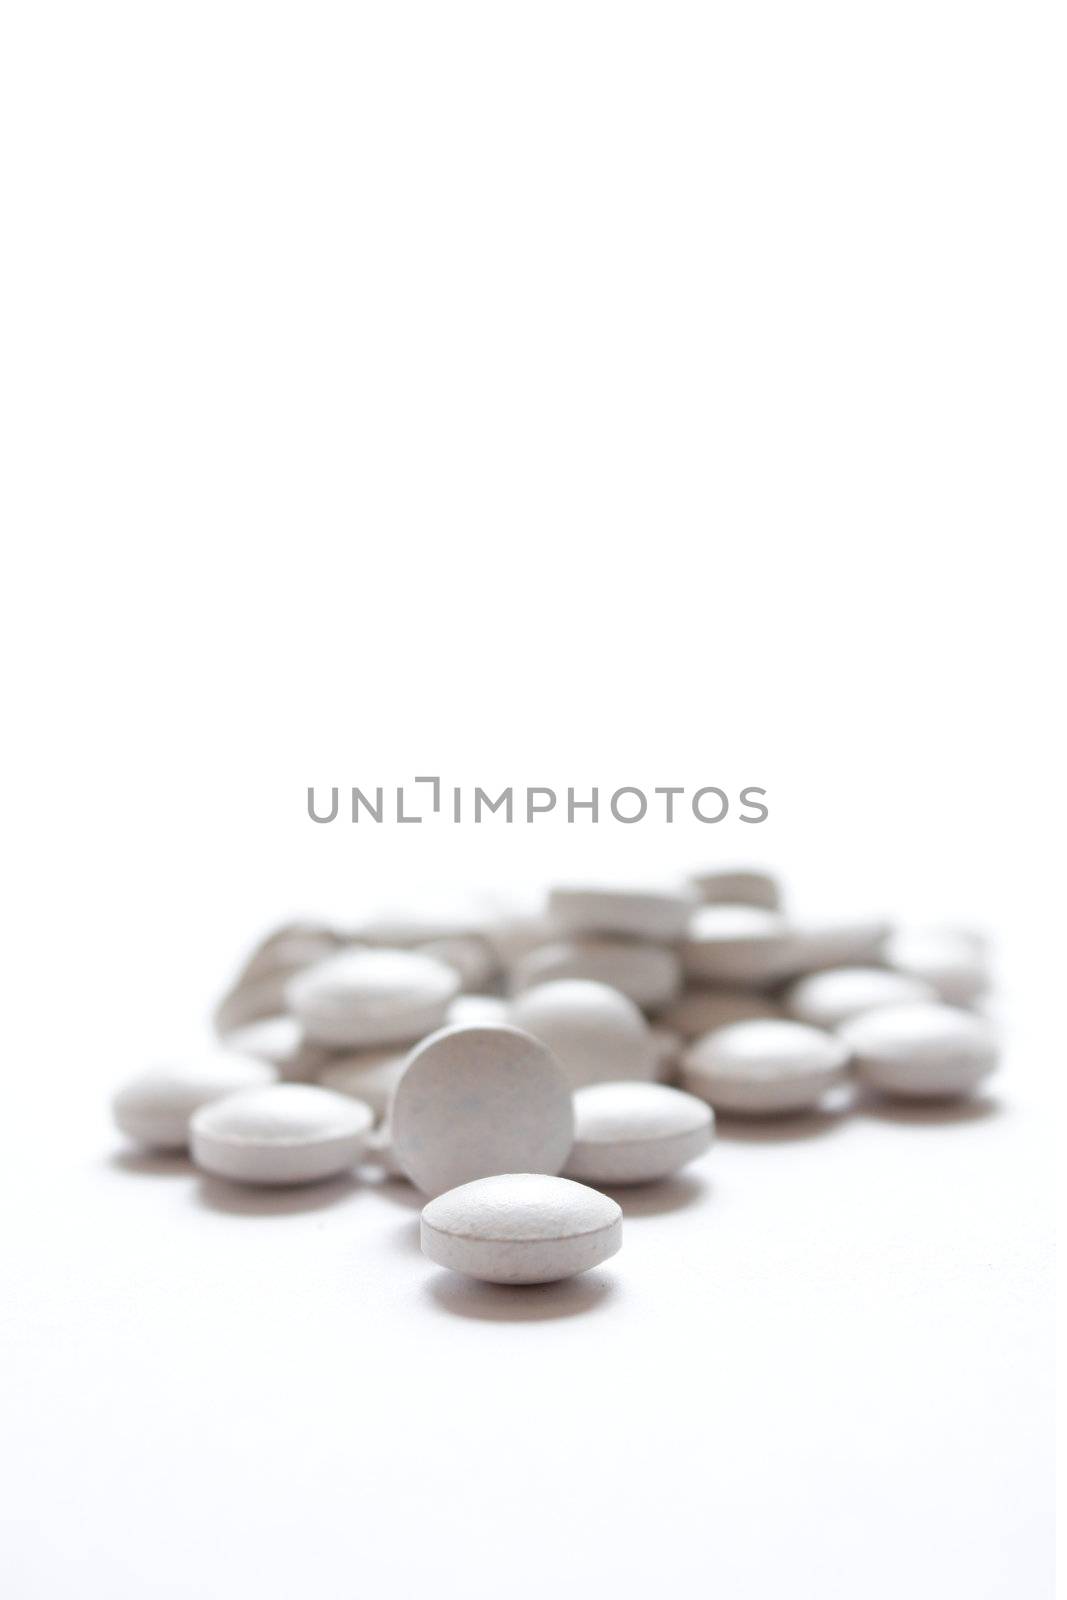 Pills by leeser